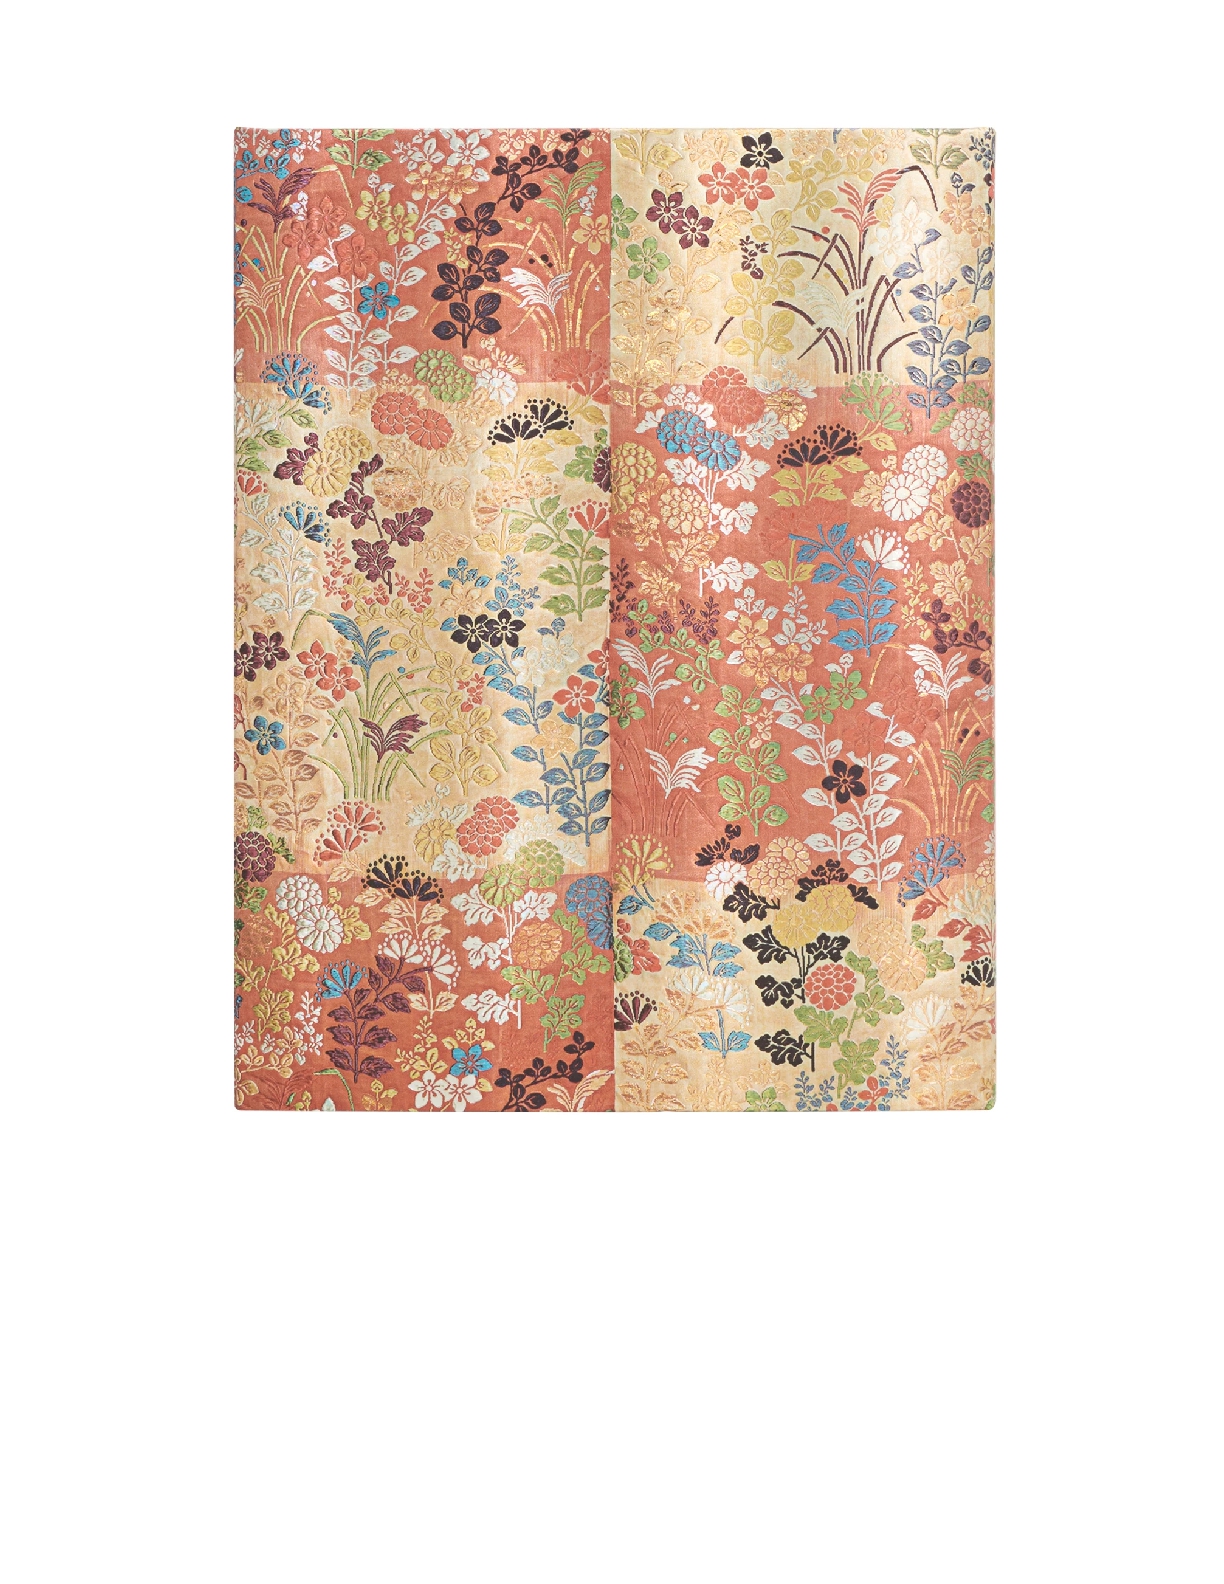 Kara-ori, Japanese Kimono, Hardcover, Ultra, Unlined, Wrap Closure, 144 Pg, 120 GSM